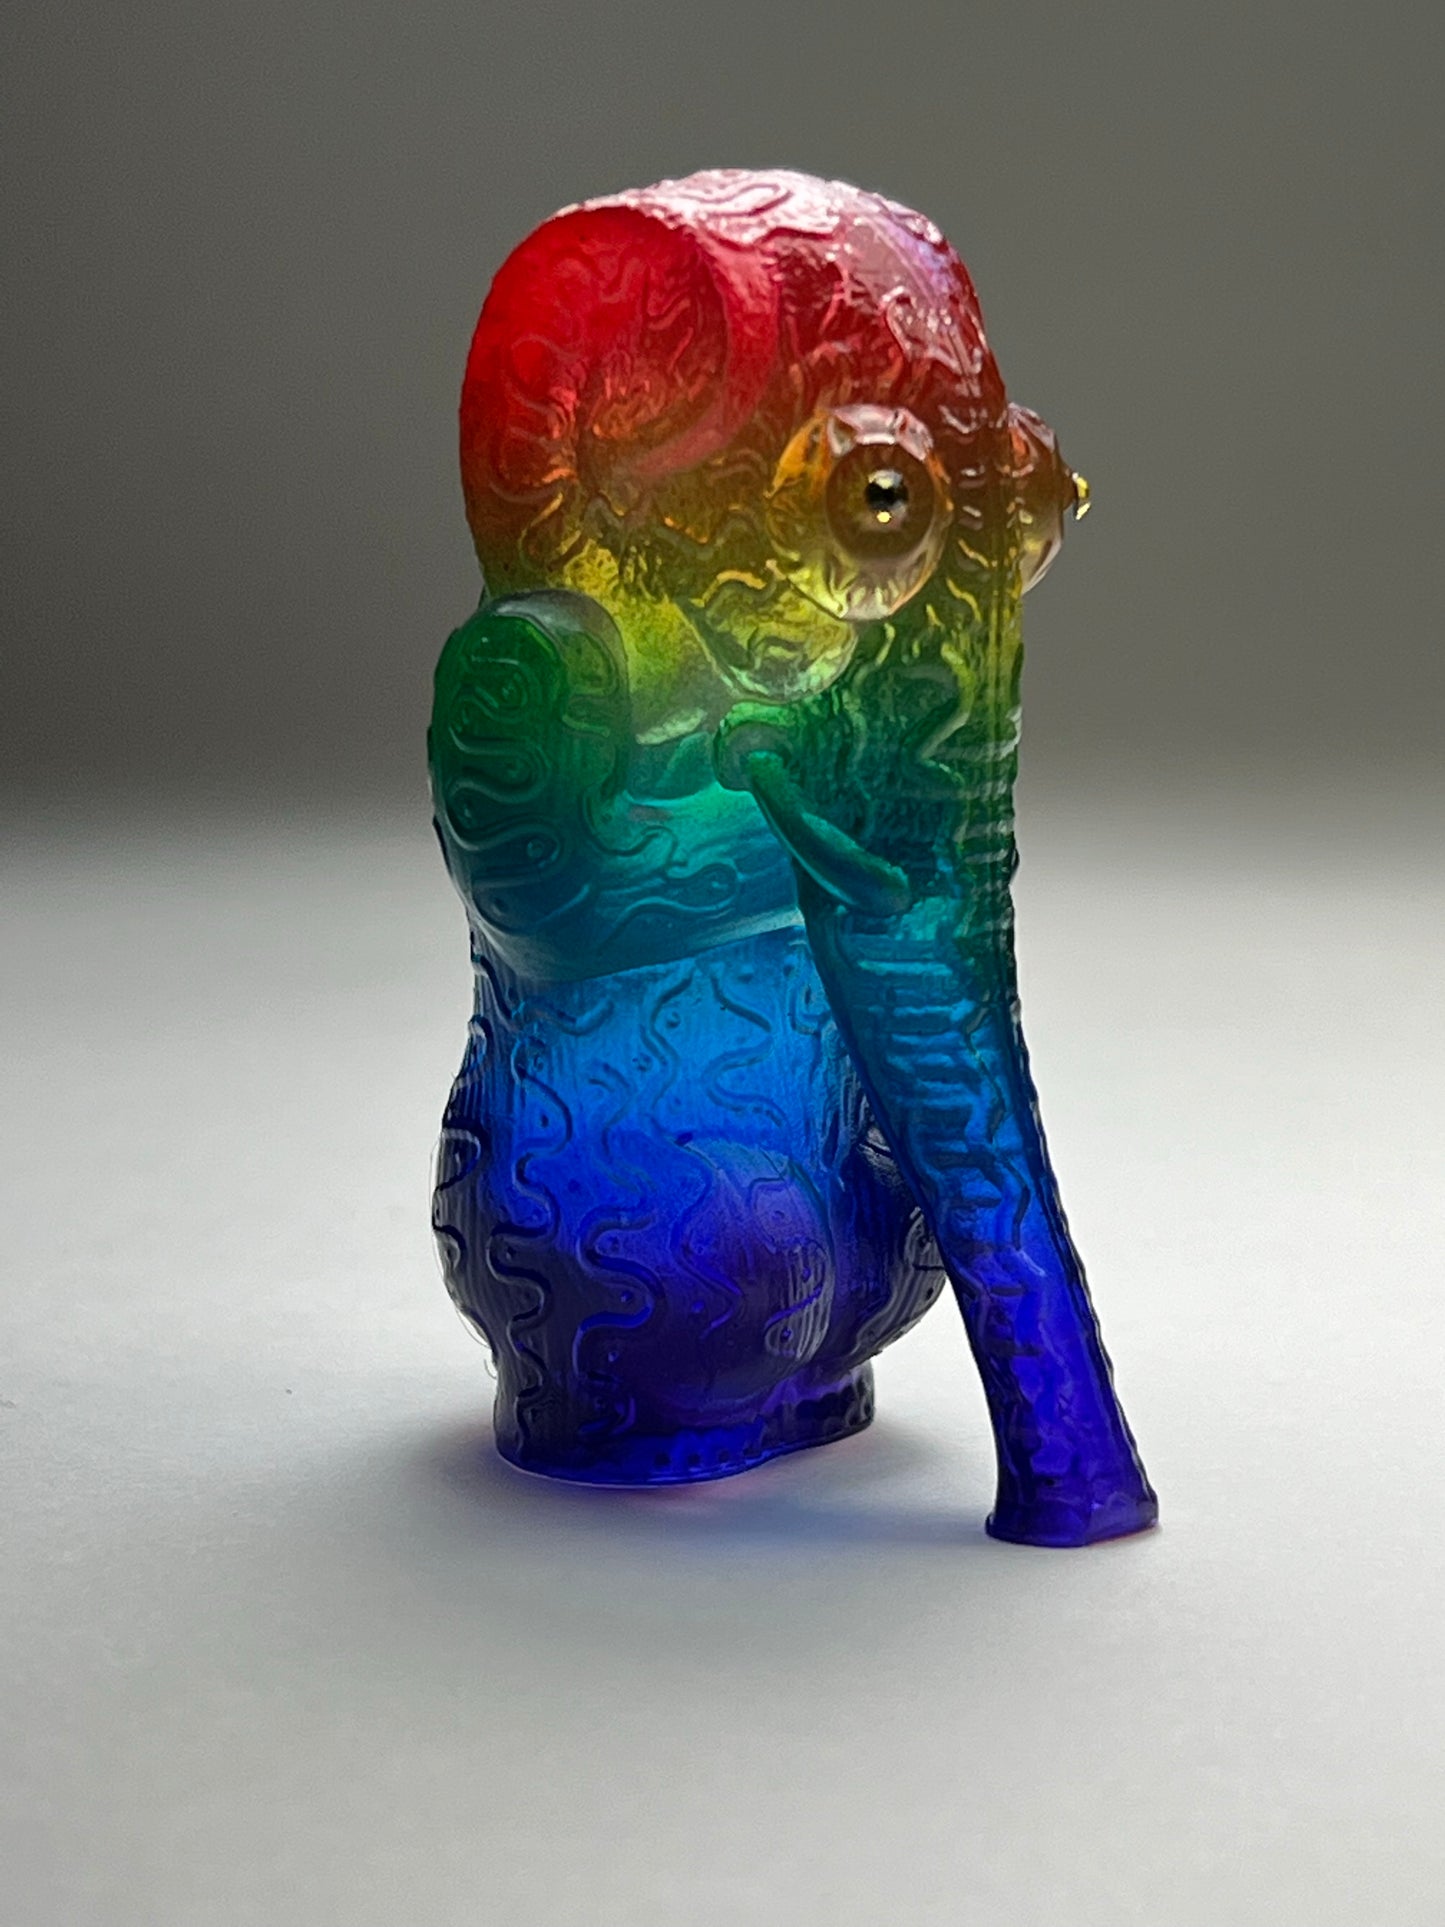 After Elephant: Rainbow Vision